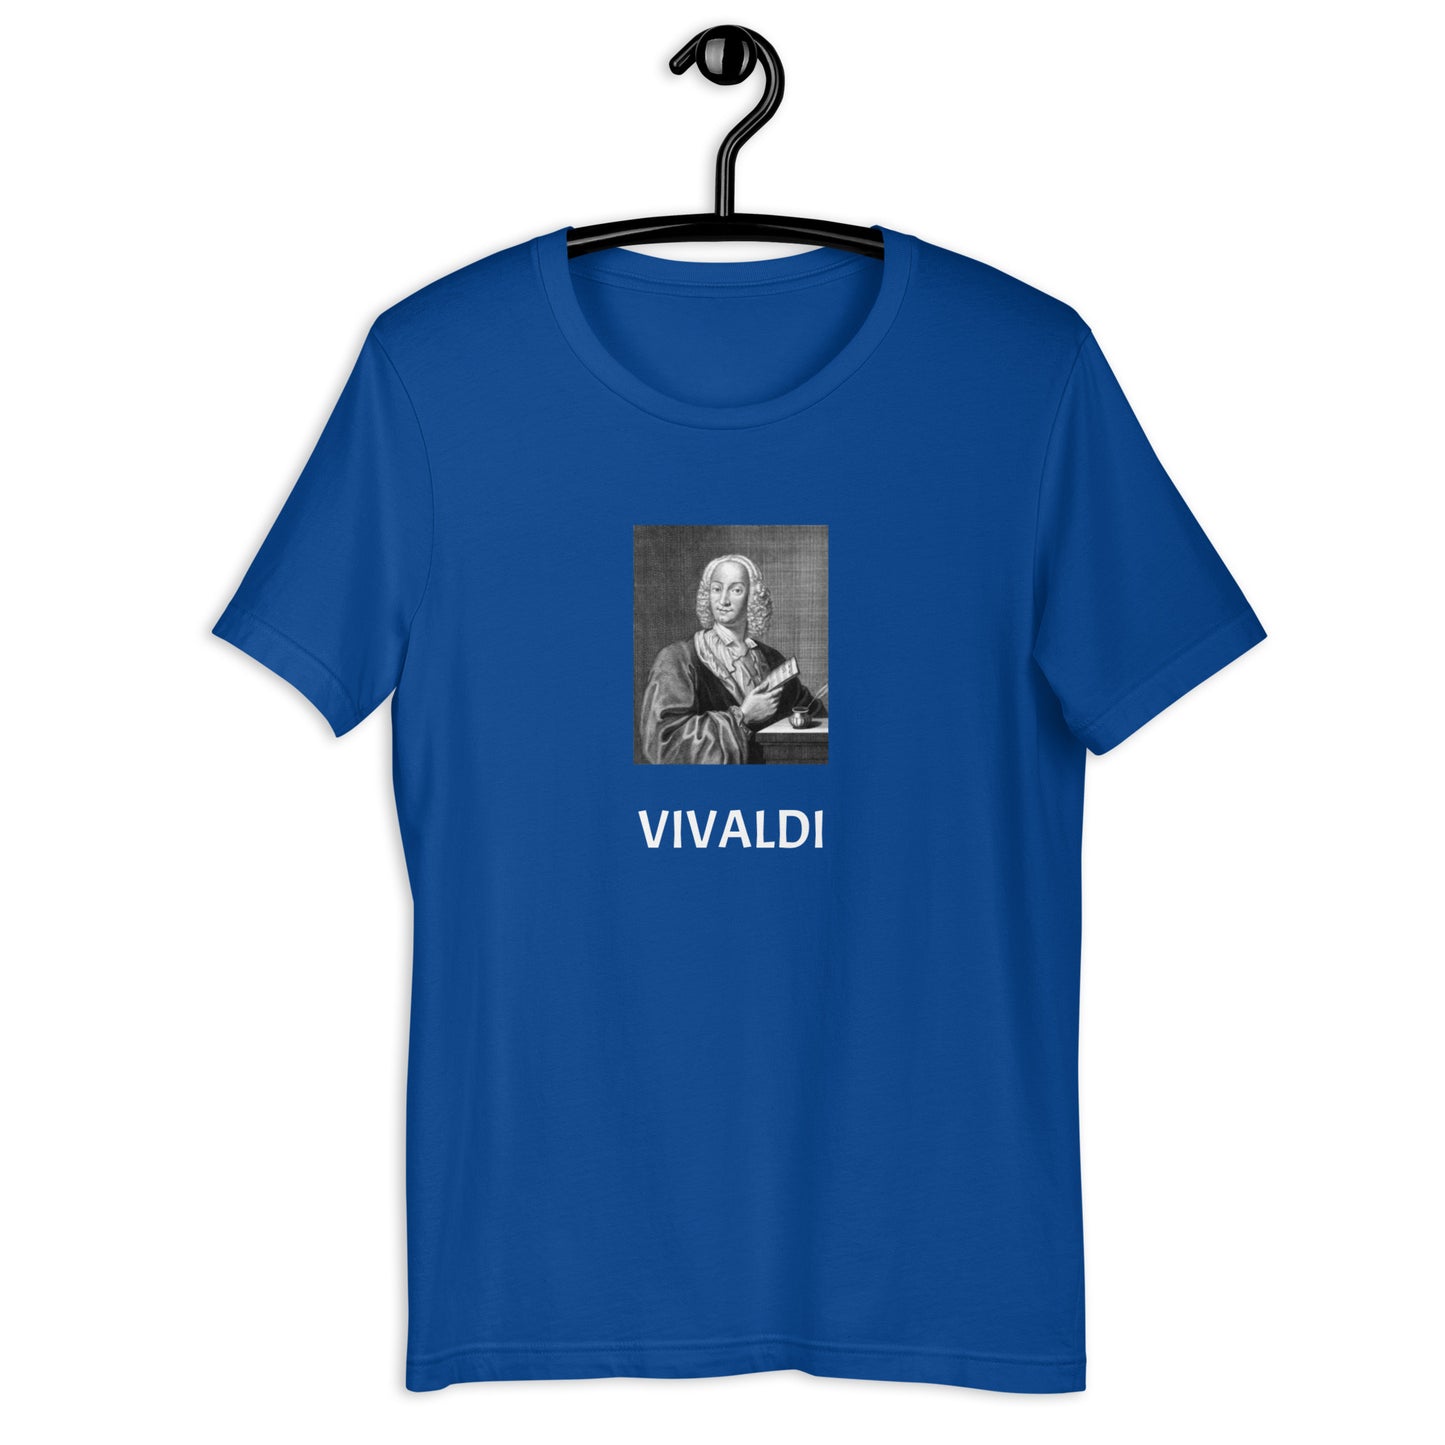 Vivaldi unisex t-shirt